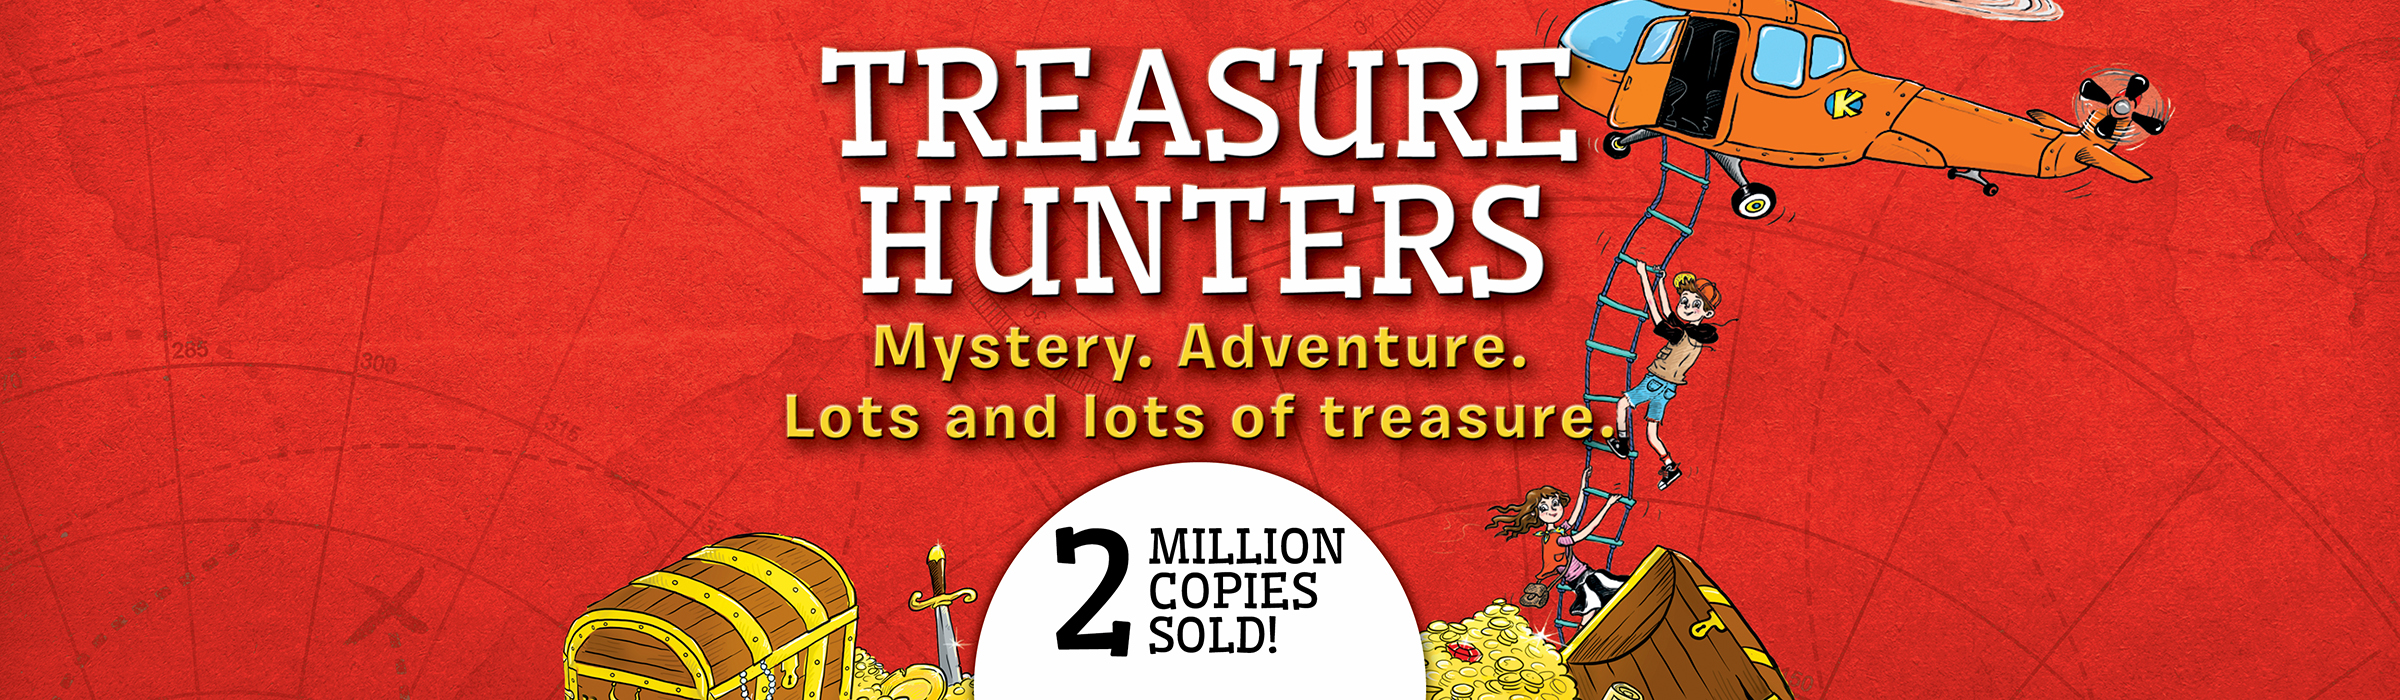 Treasure Hunters. Mystery, adventure, lots and lots of treasure. 2 million copies sold!